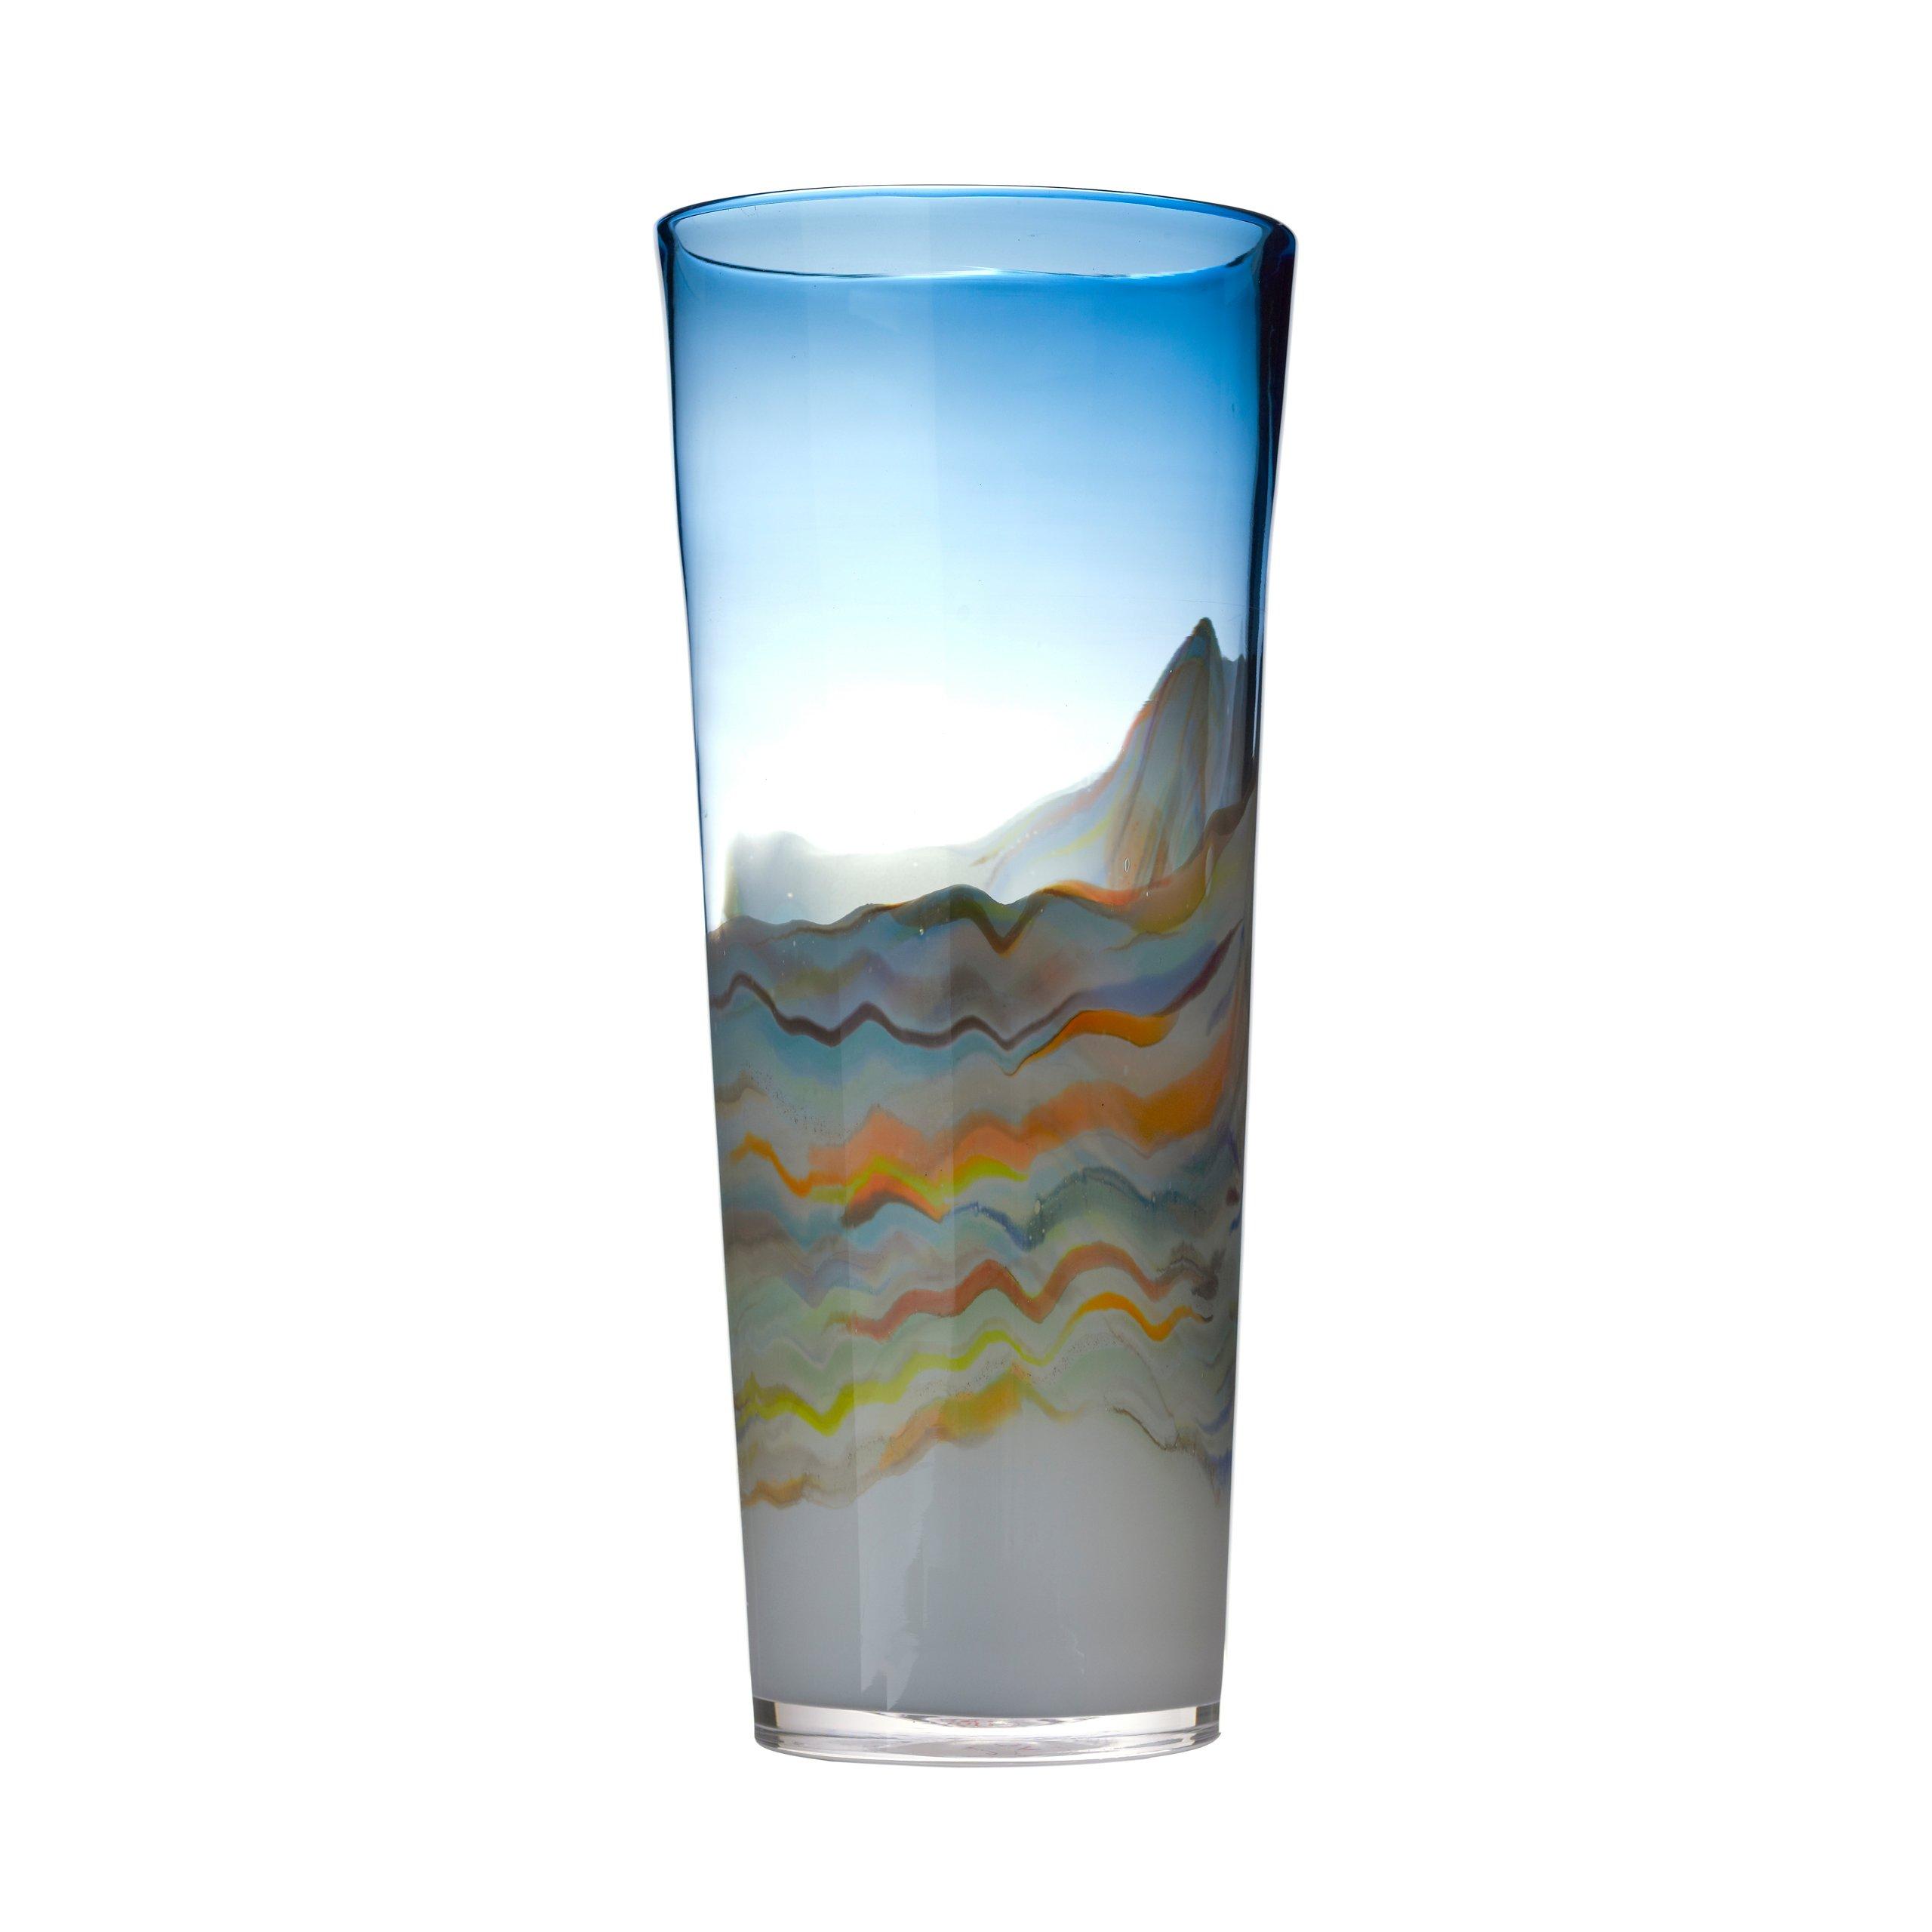 Rhian Hand-Blown Tall Glass Vase